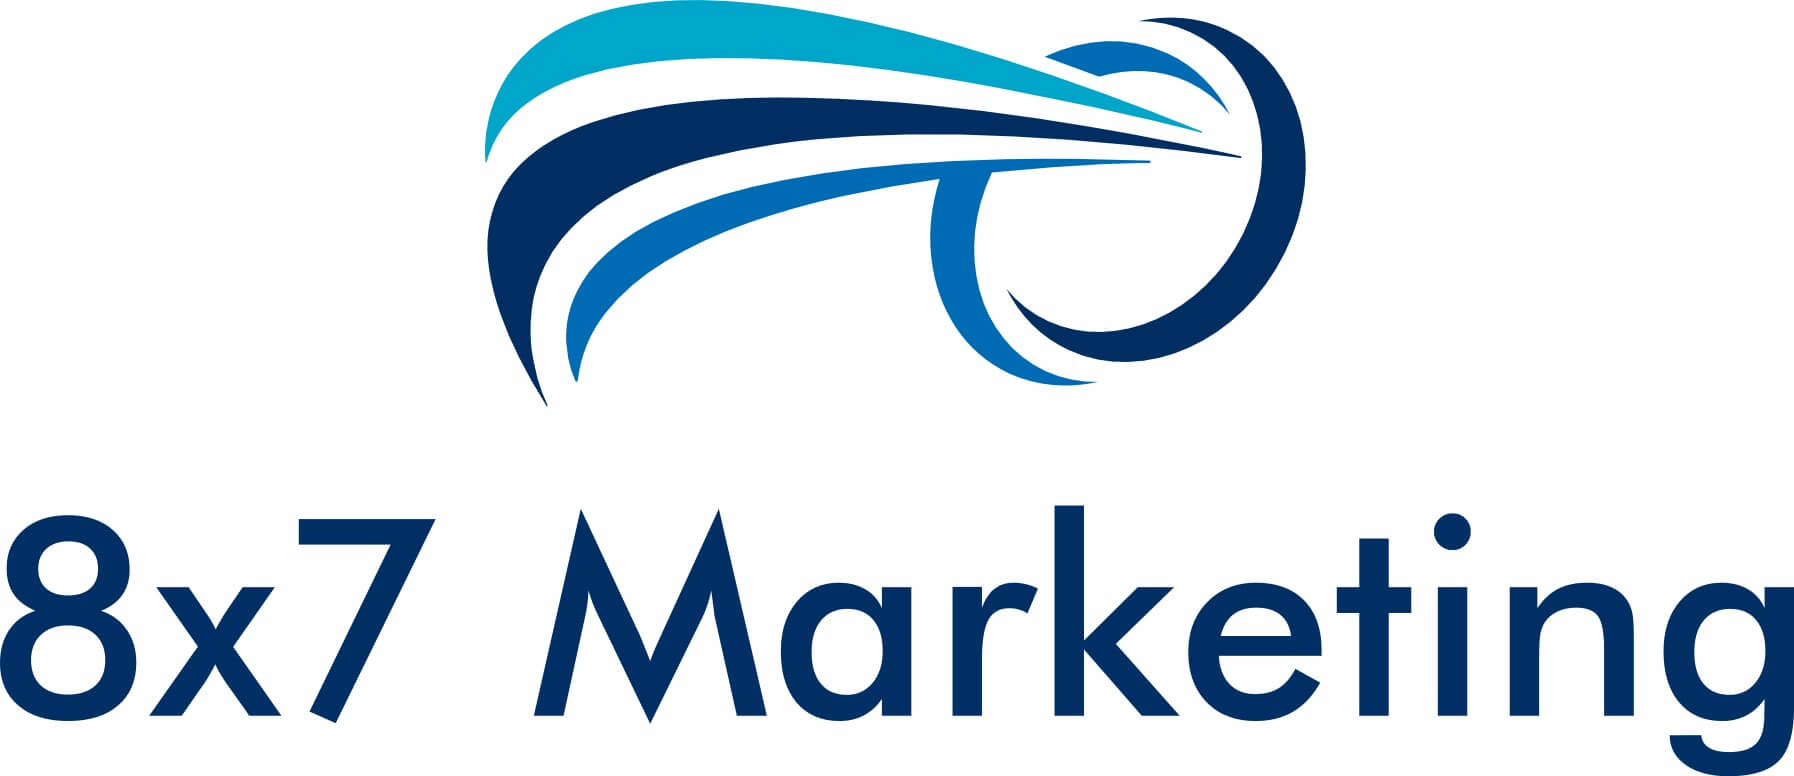 8×7 Marketing Logo